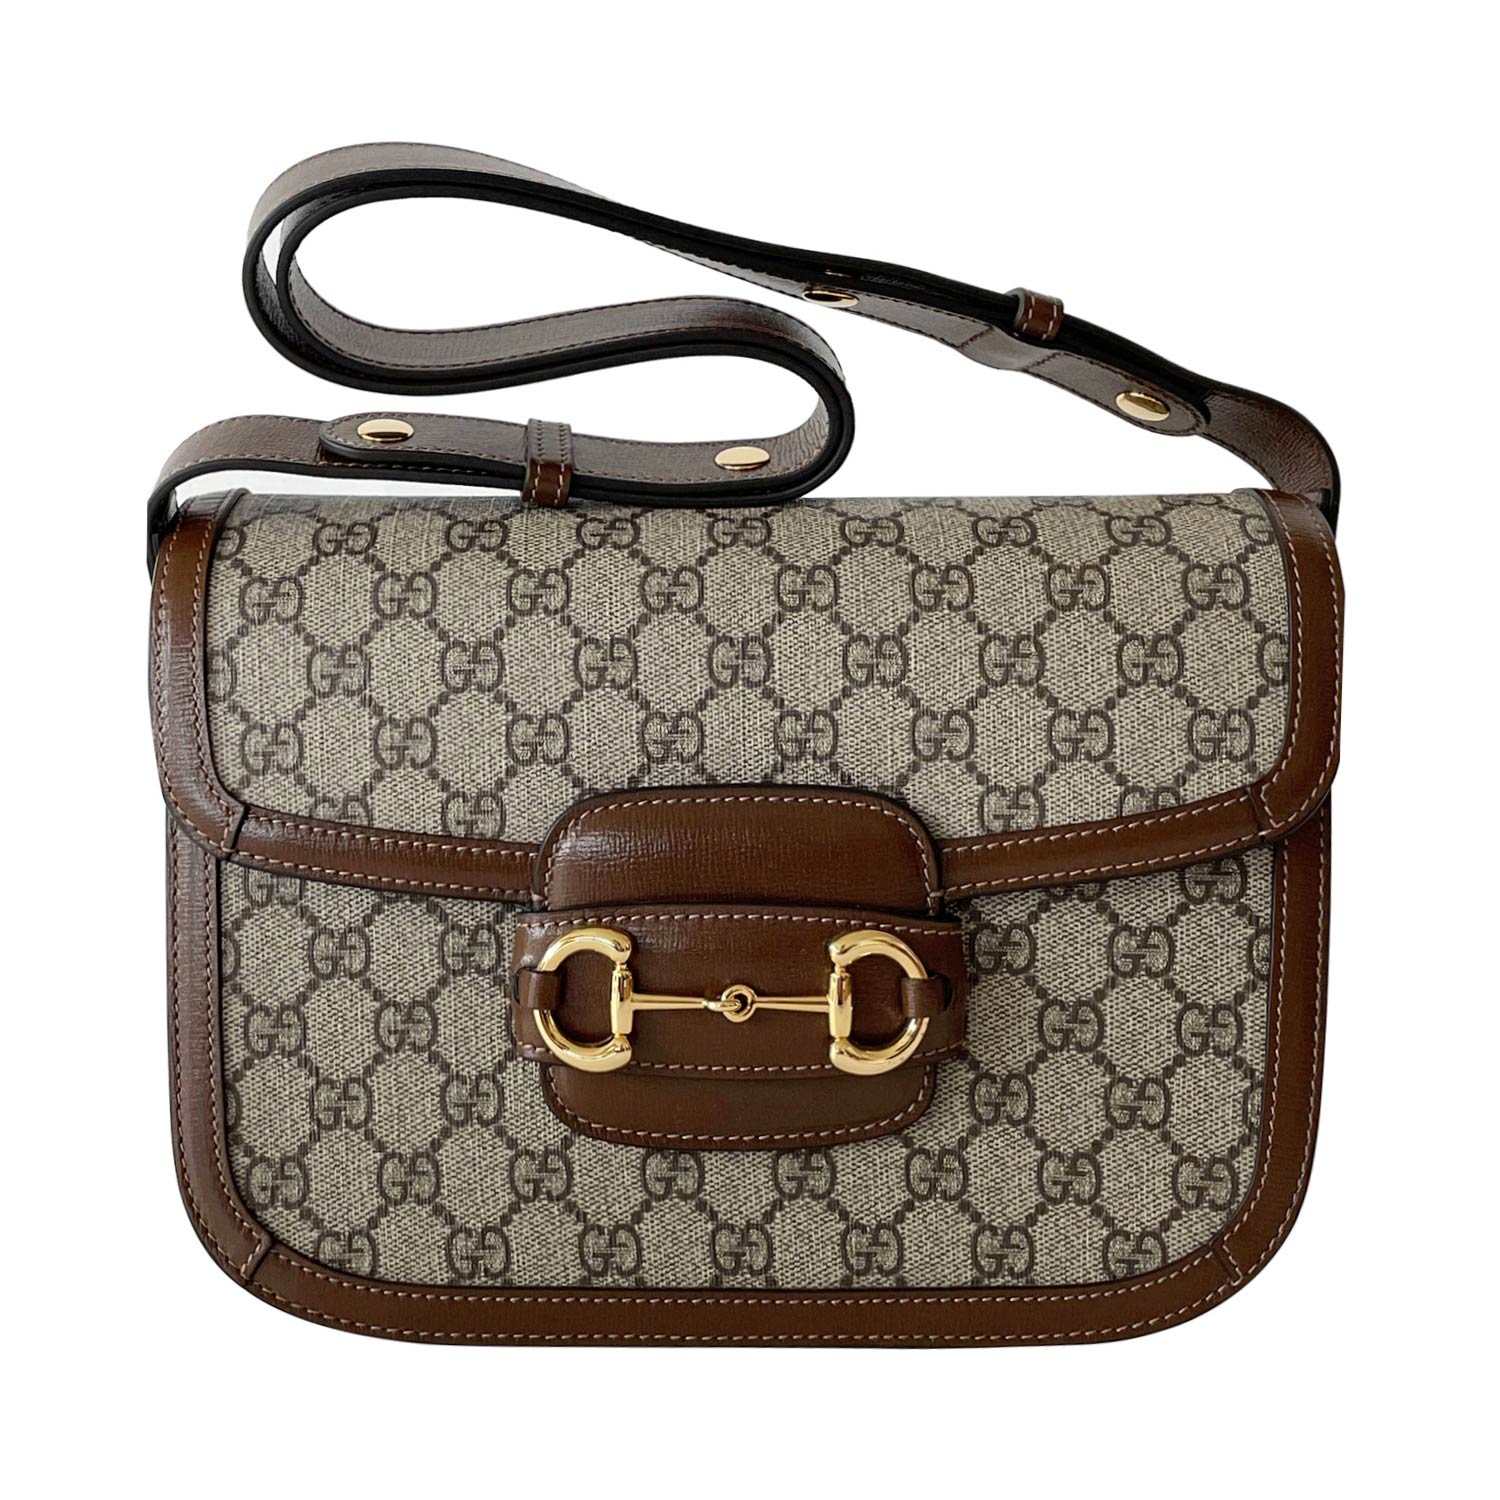 Gucci online exclusive preview Gucci 1955 horsebit bag supreme shoulder bag  602204  Shoulder bag Bags Street style bags